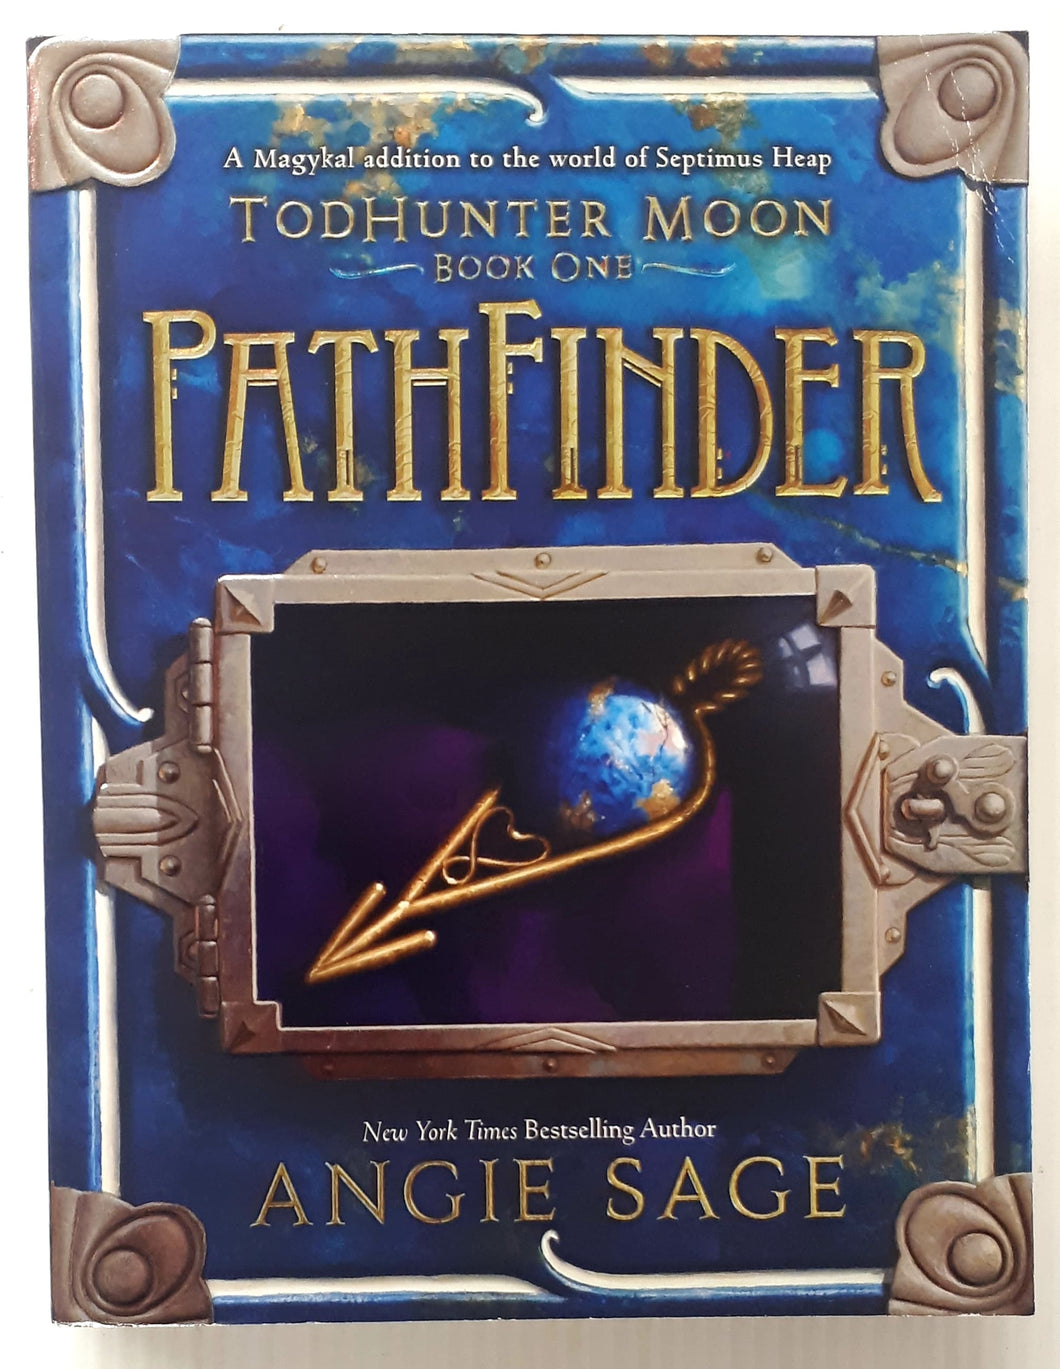 PATHFINDER - Angie Sage